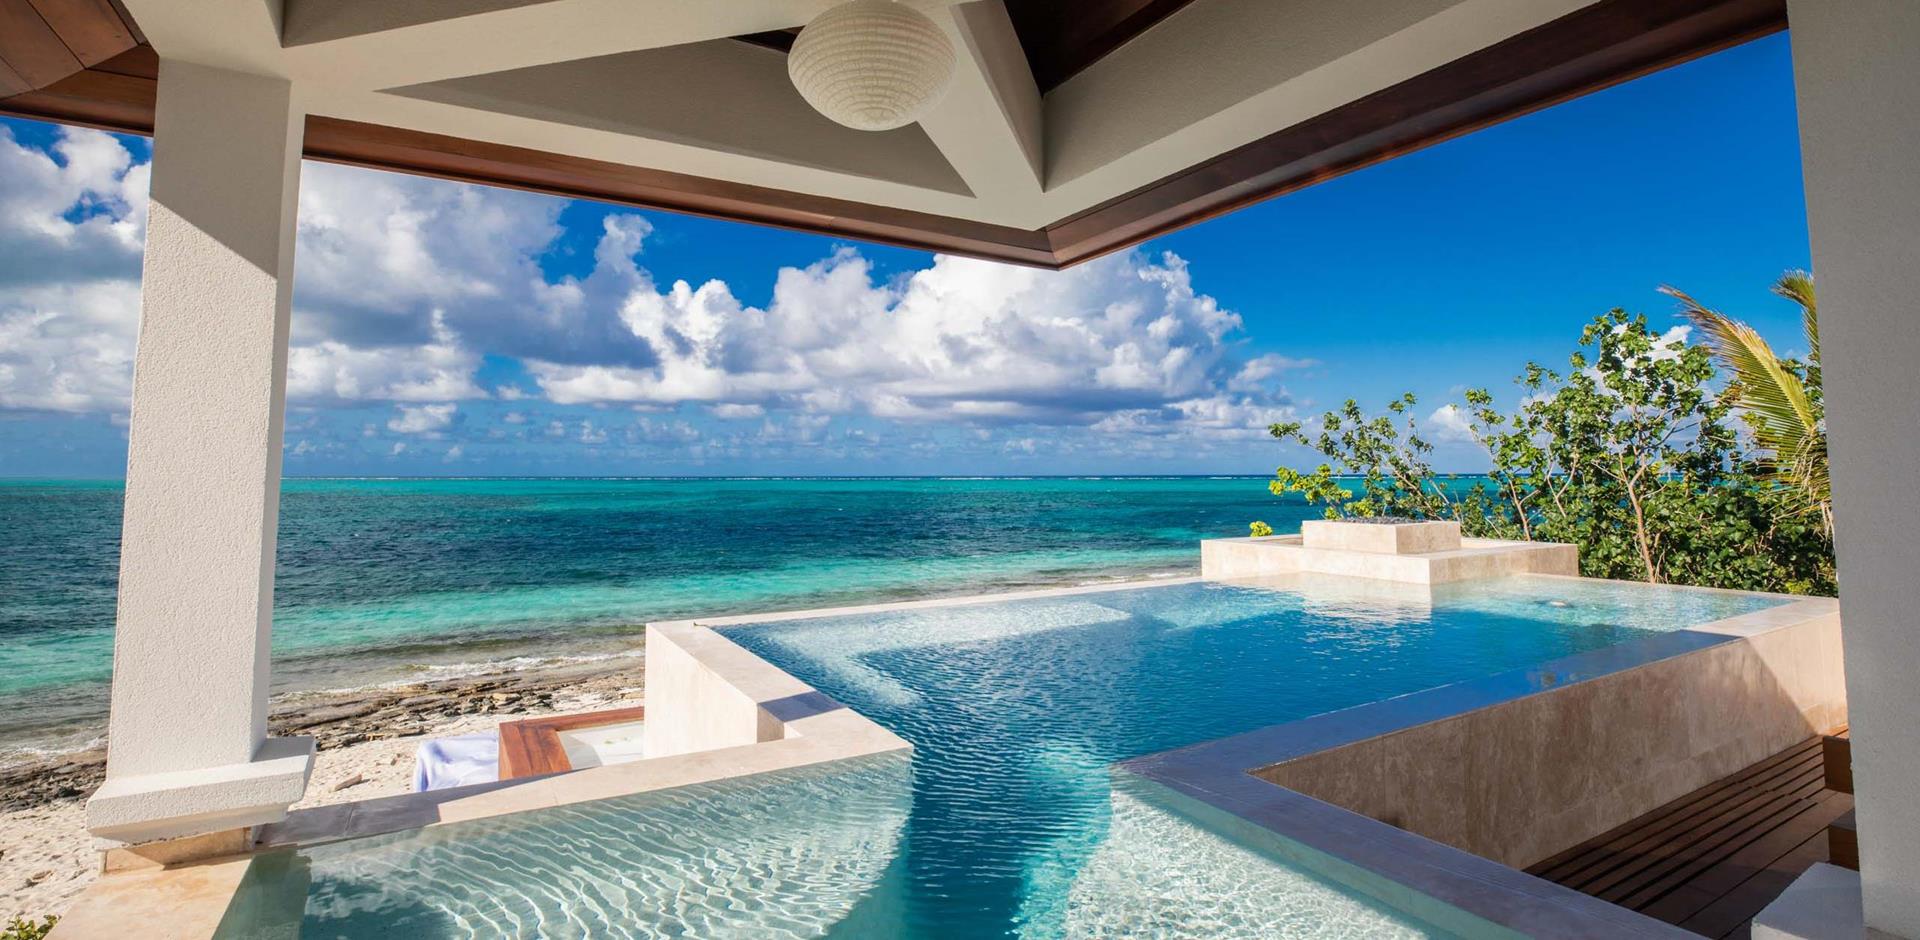 Pool area, Kai House, Turks and Caicos, Caribbean